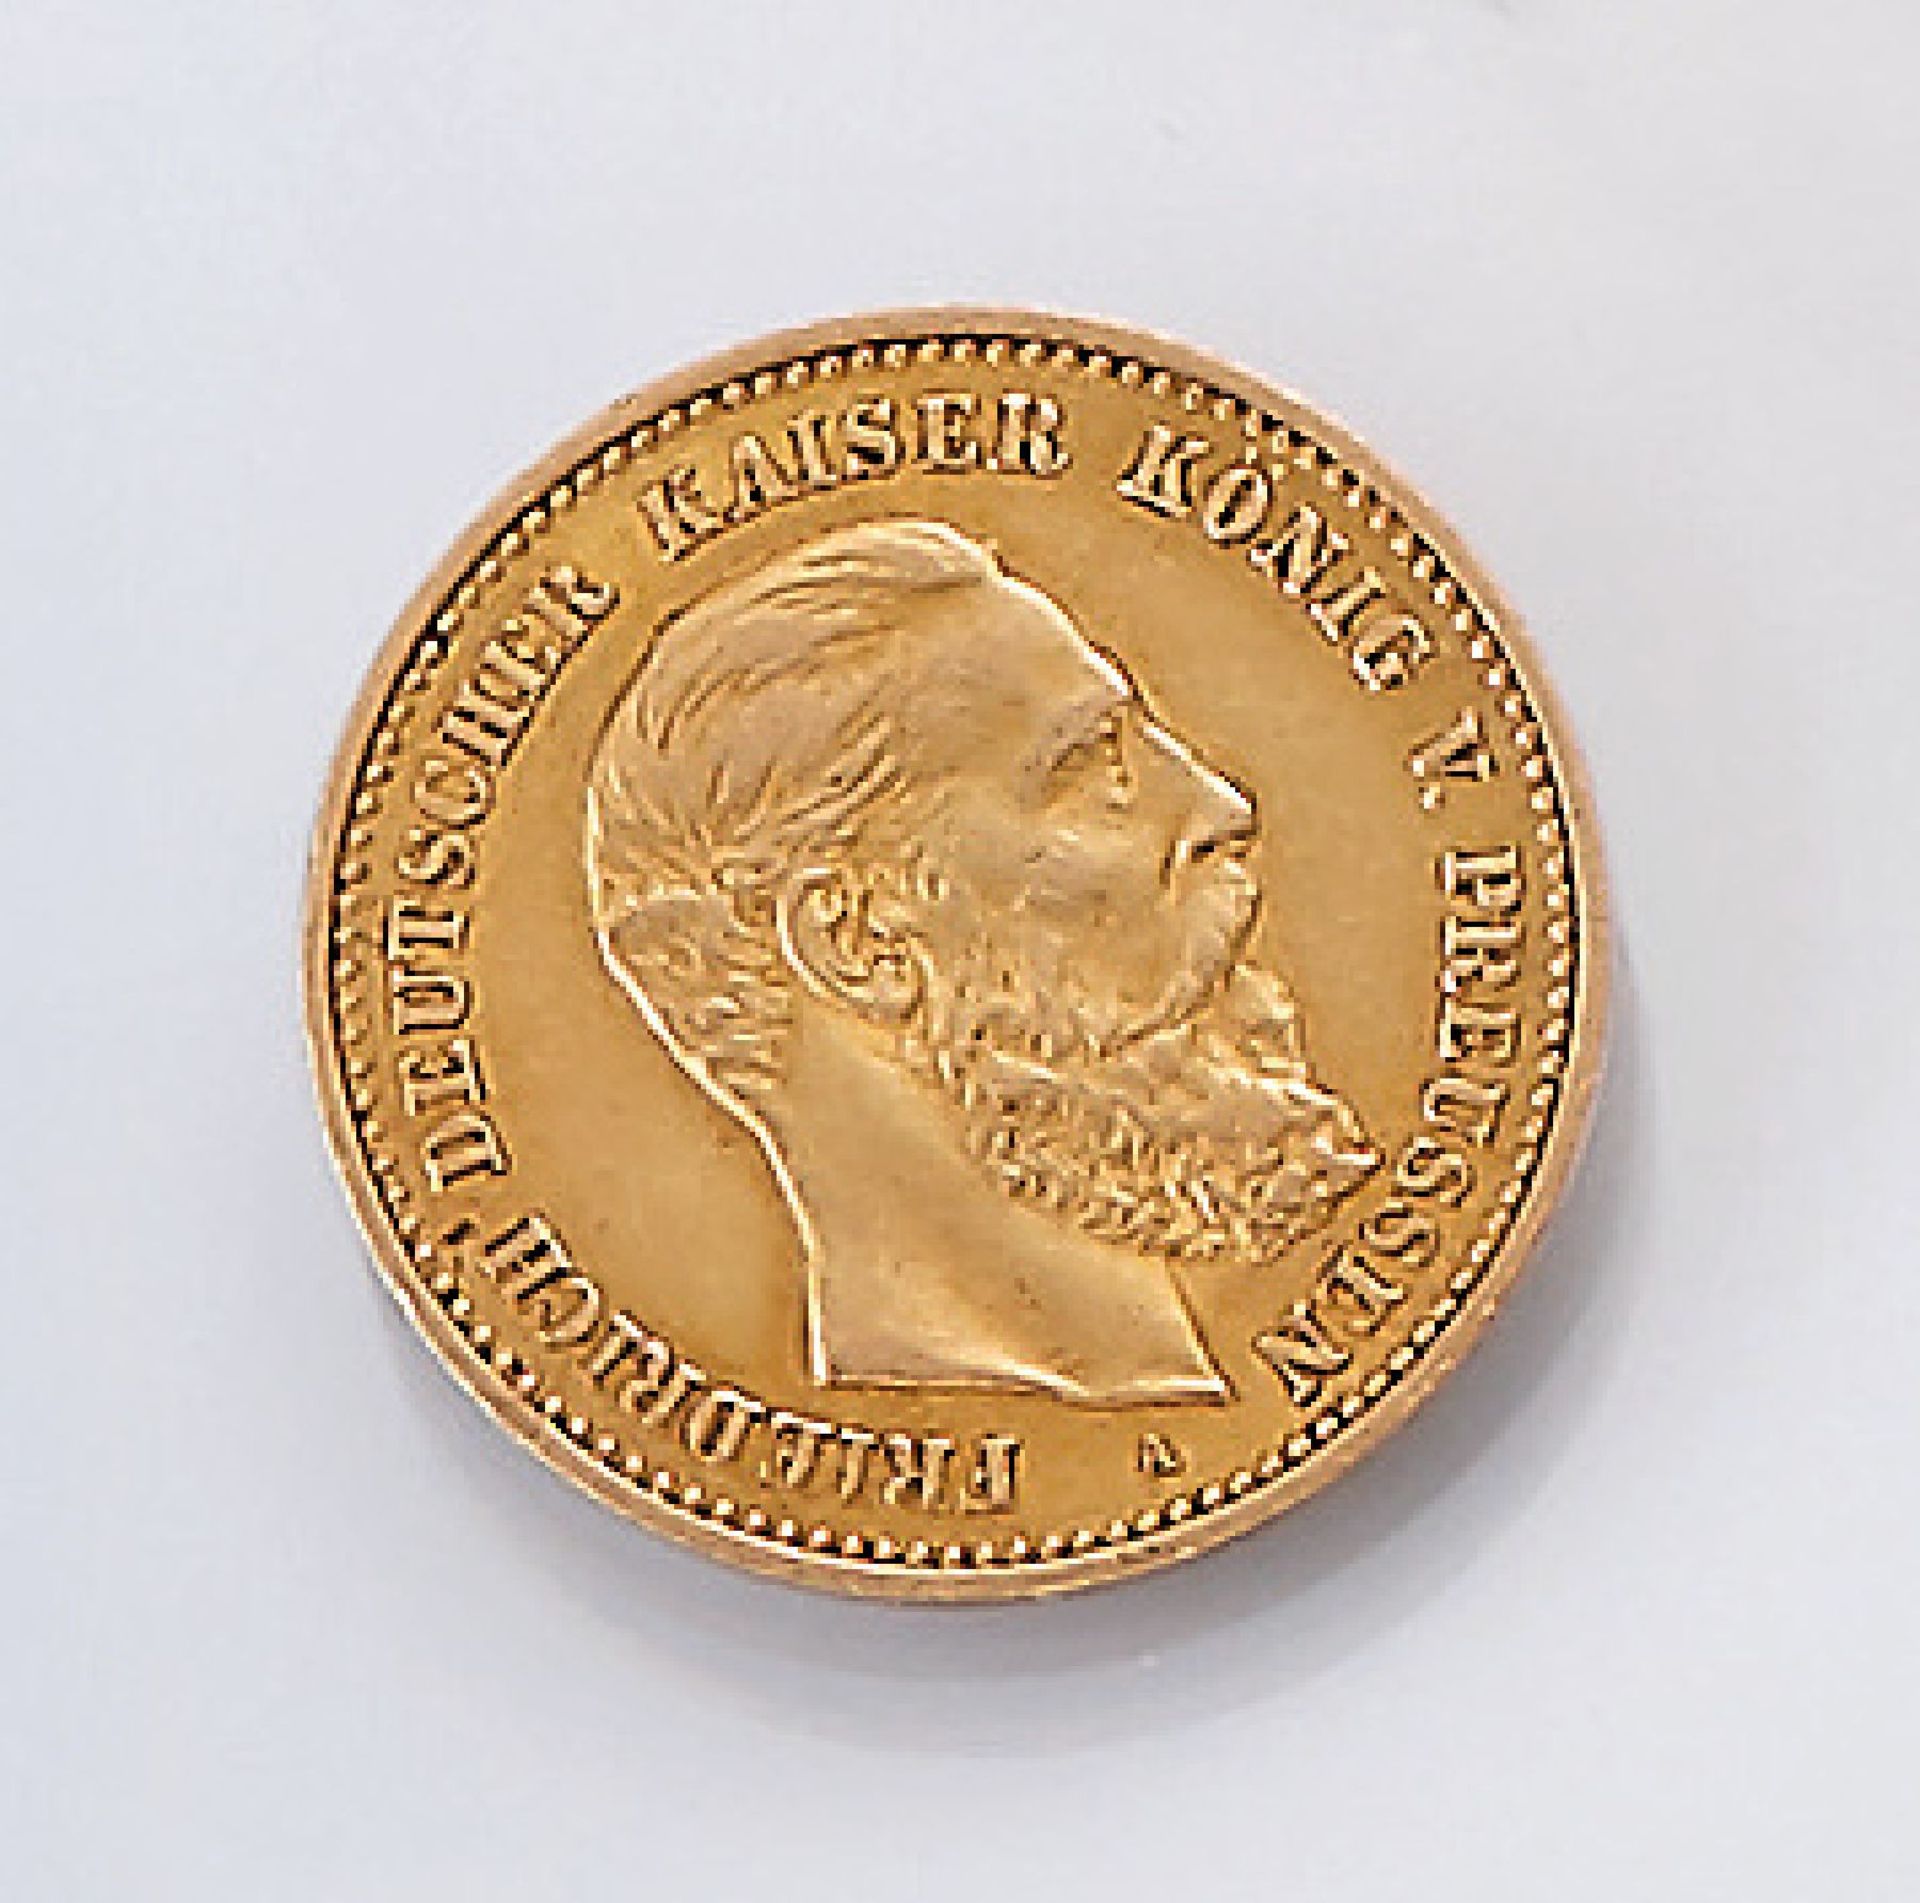 Gold coin, 10 Mark, German Reich, 1888 , Friedrich german emperor king of Prussia, impressed mark